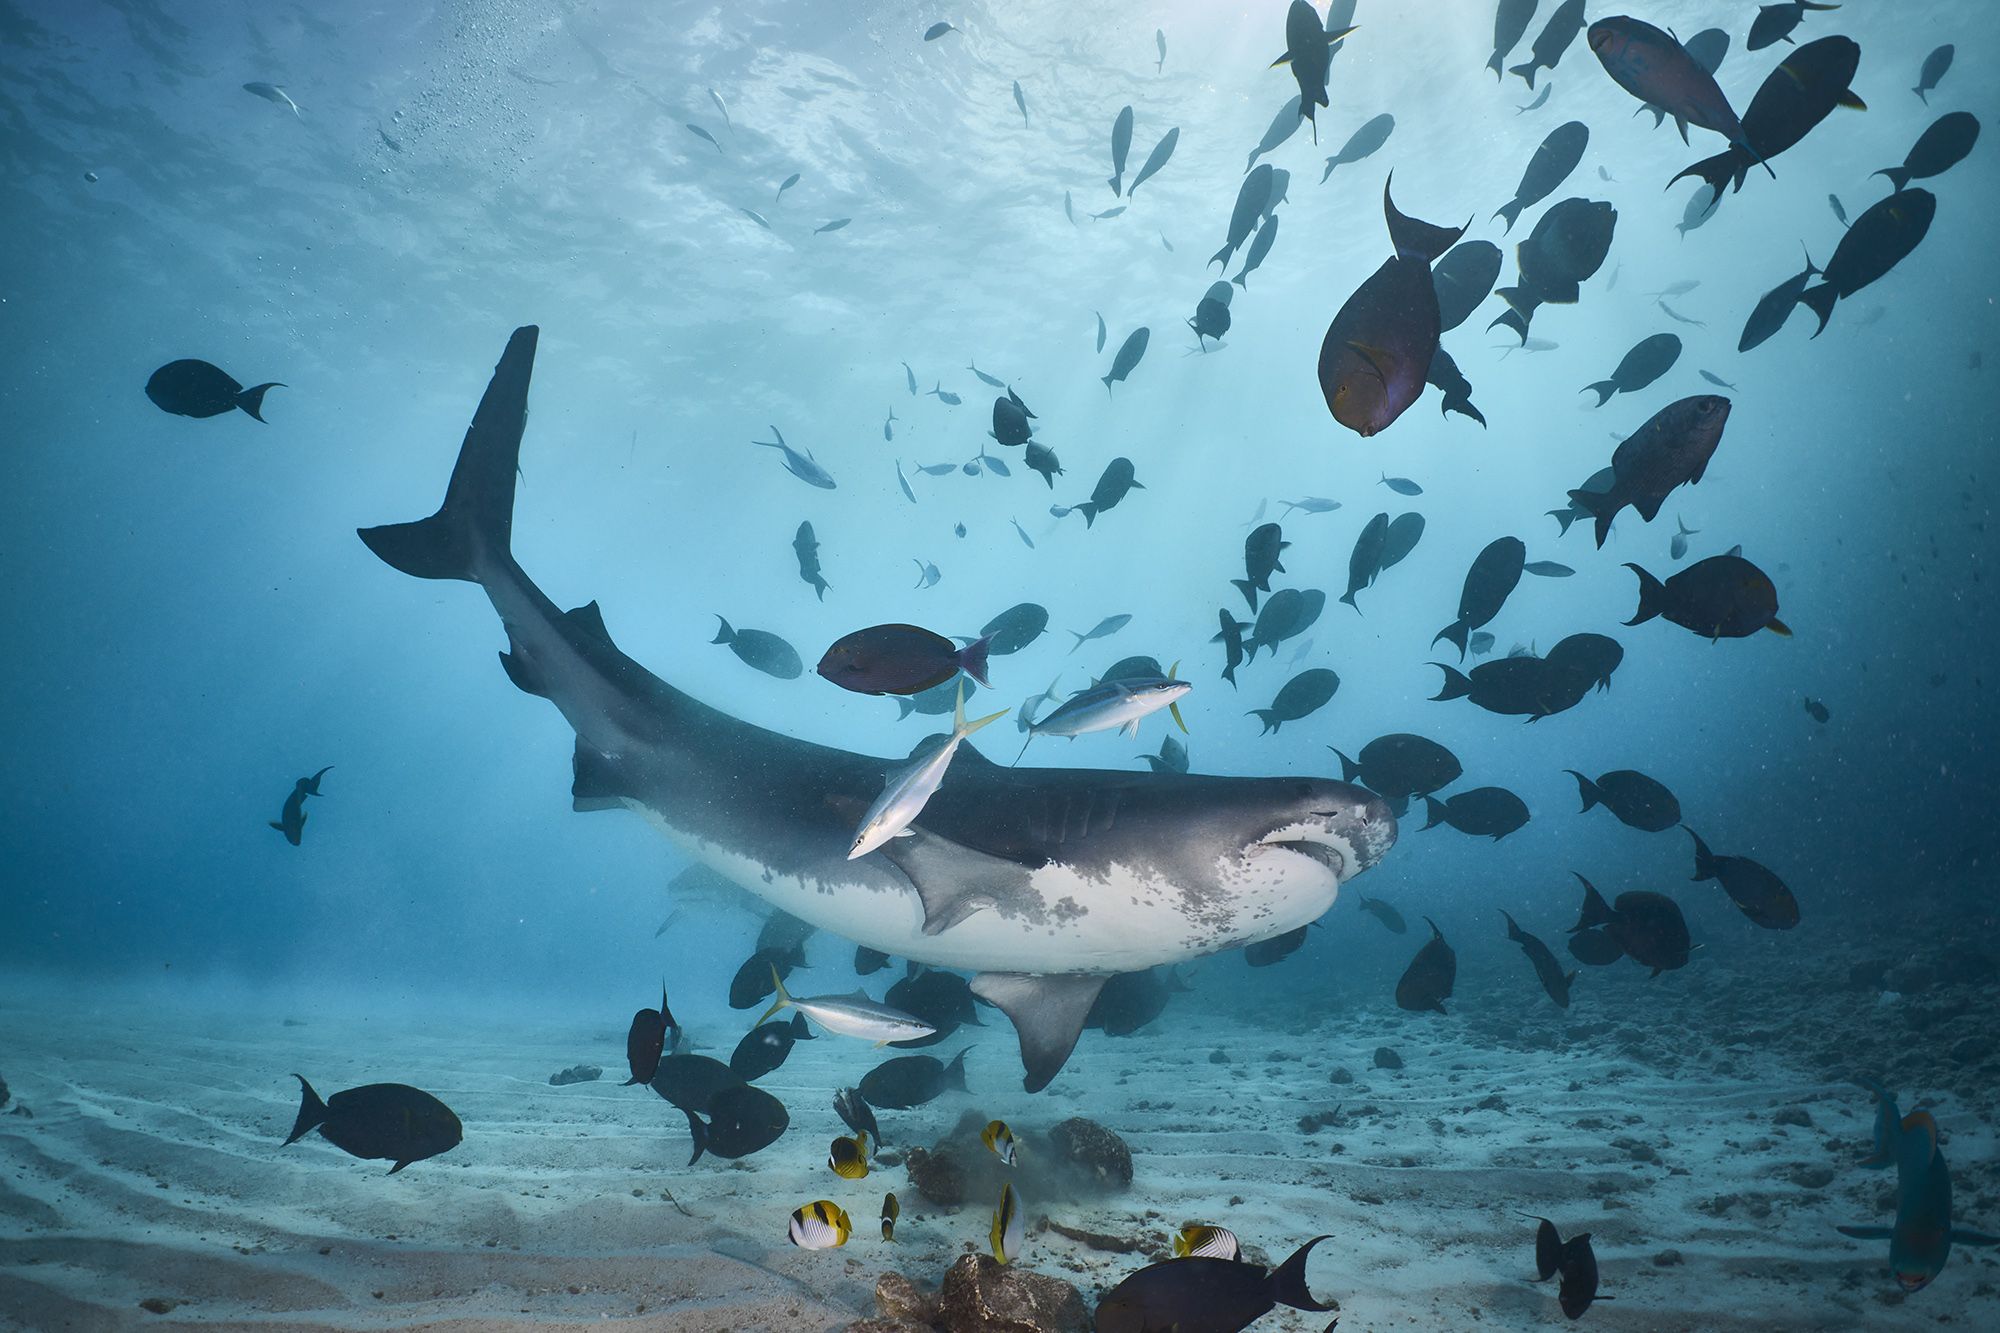 тигровая акула, акула, дайвинг, подводная фотосъемка, PAVEL PEREPECHAEV